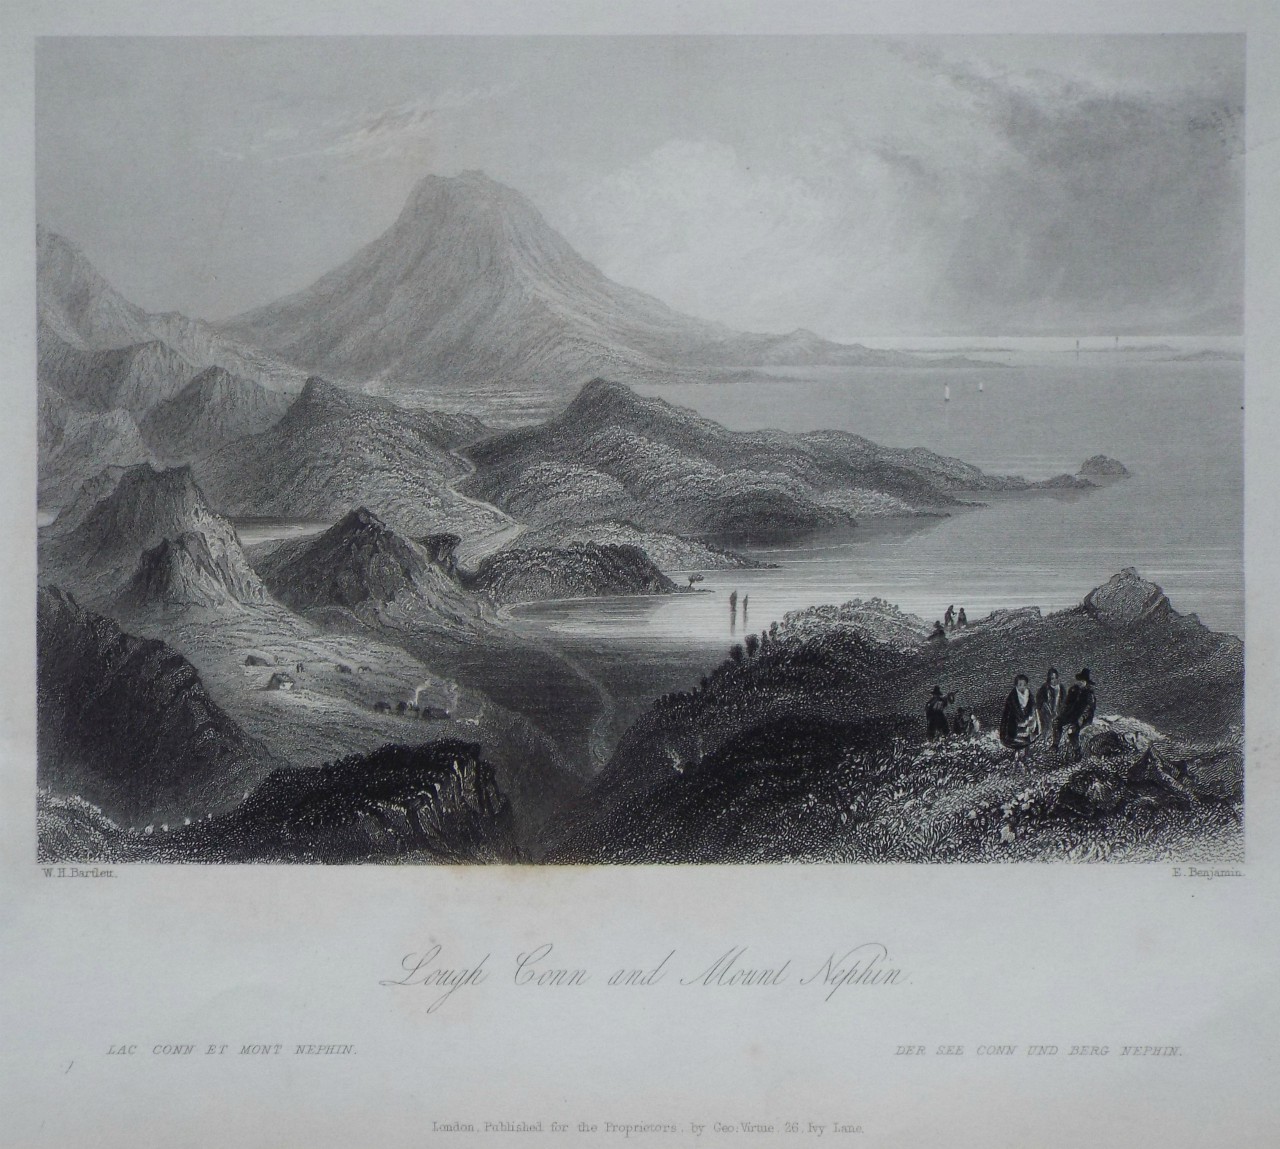 Print - Lough Conn and Mount Nephin. - Benjamin